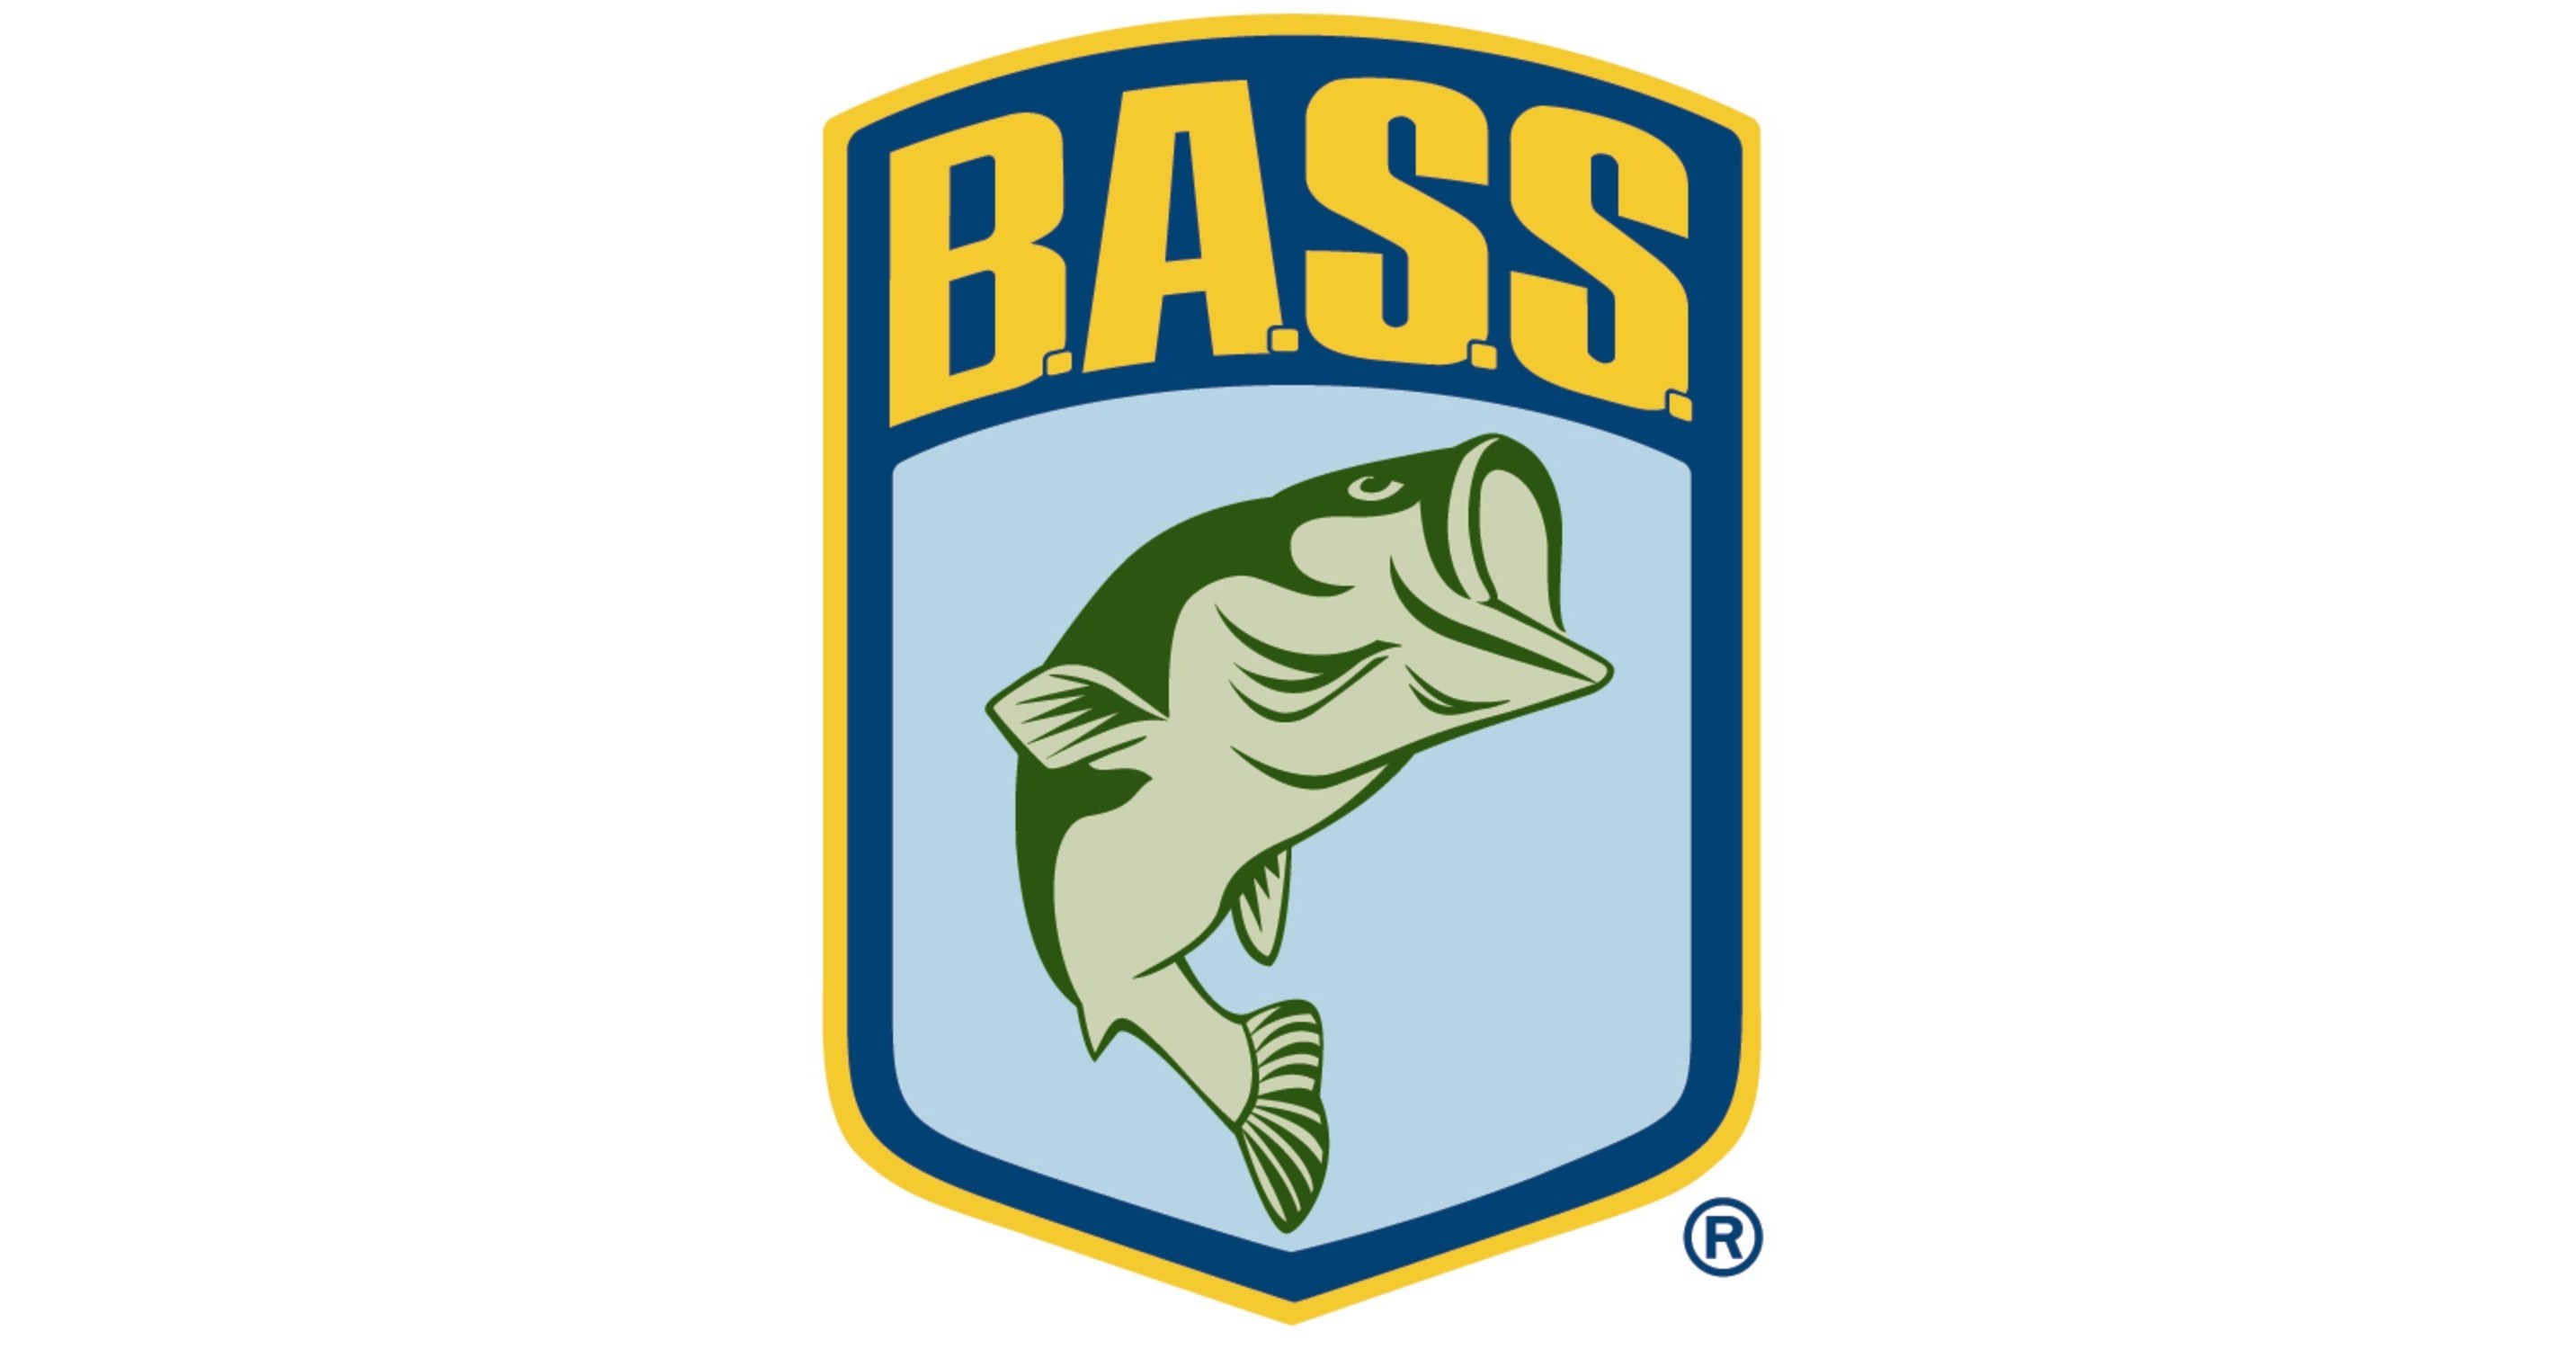 Bassmaster Elite Series 2020 Schedule Puts Emphasis On Big Bass Fisheries